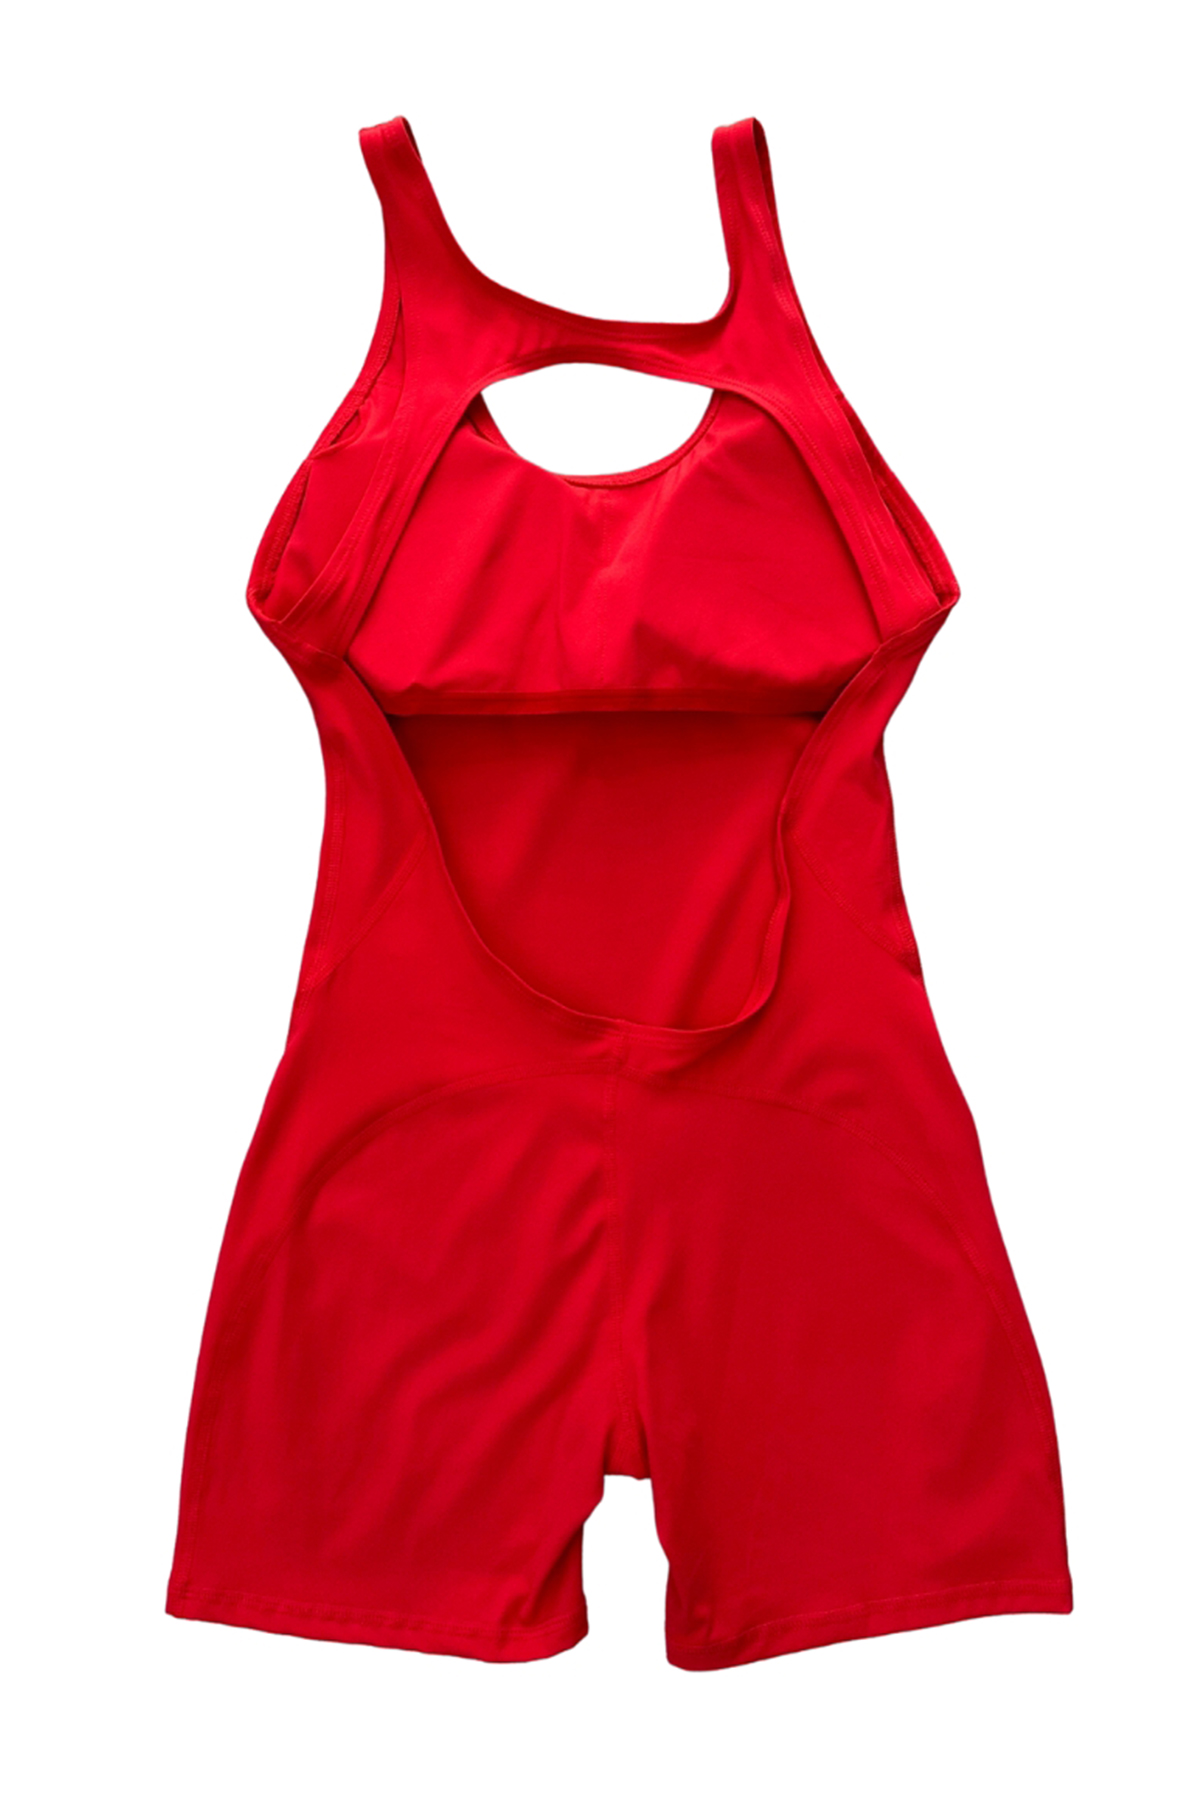 Mini-Short-Cut-out-Bodysuit-for-Exercising-red-back